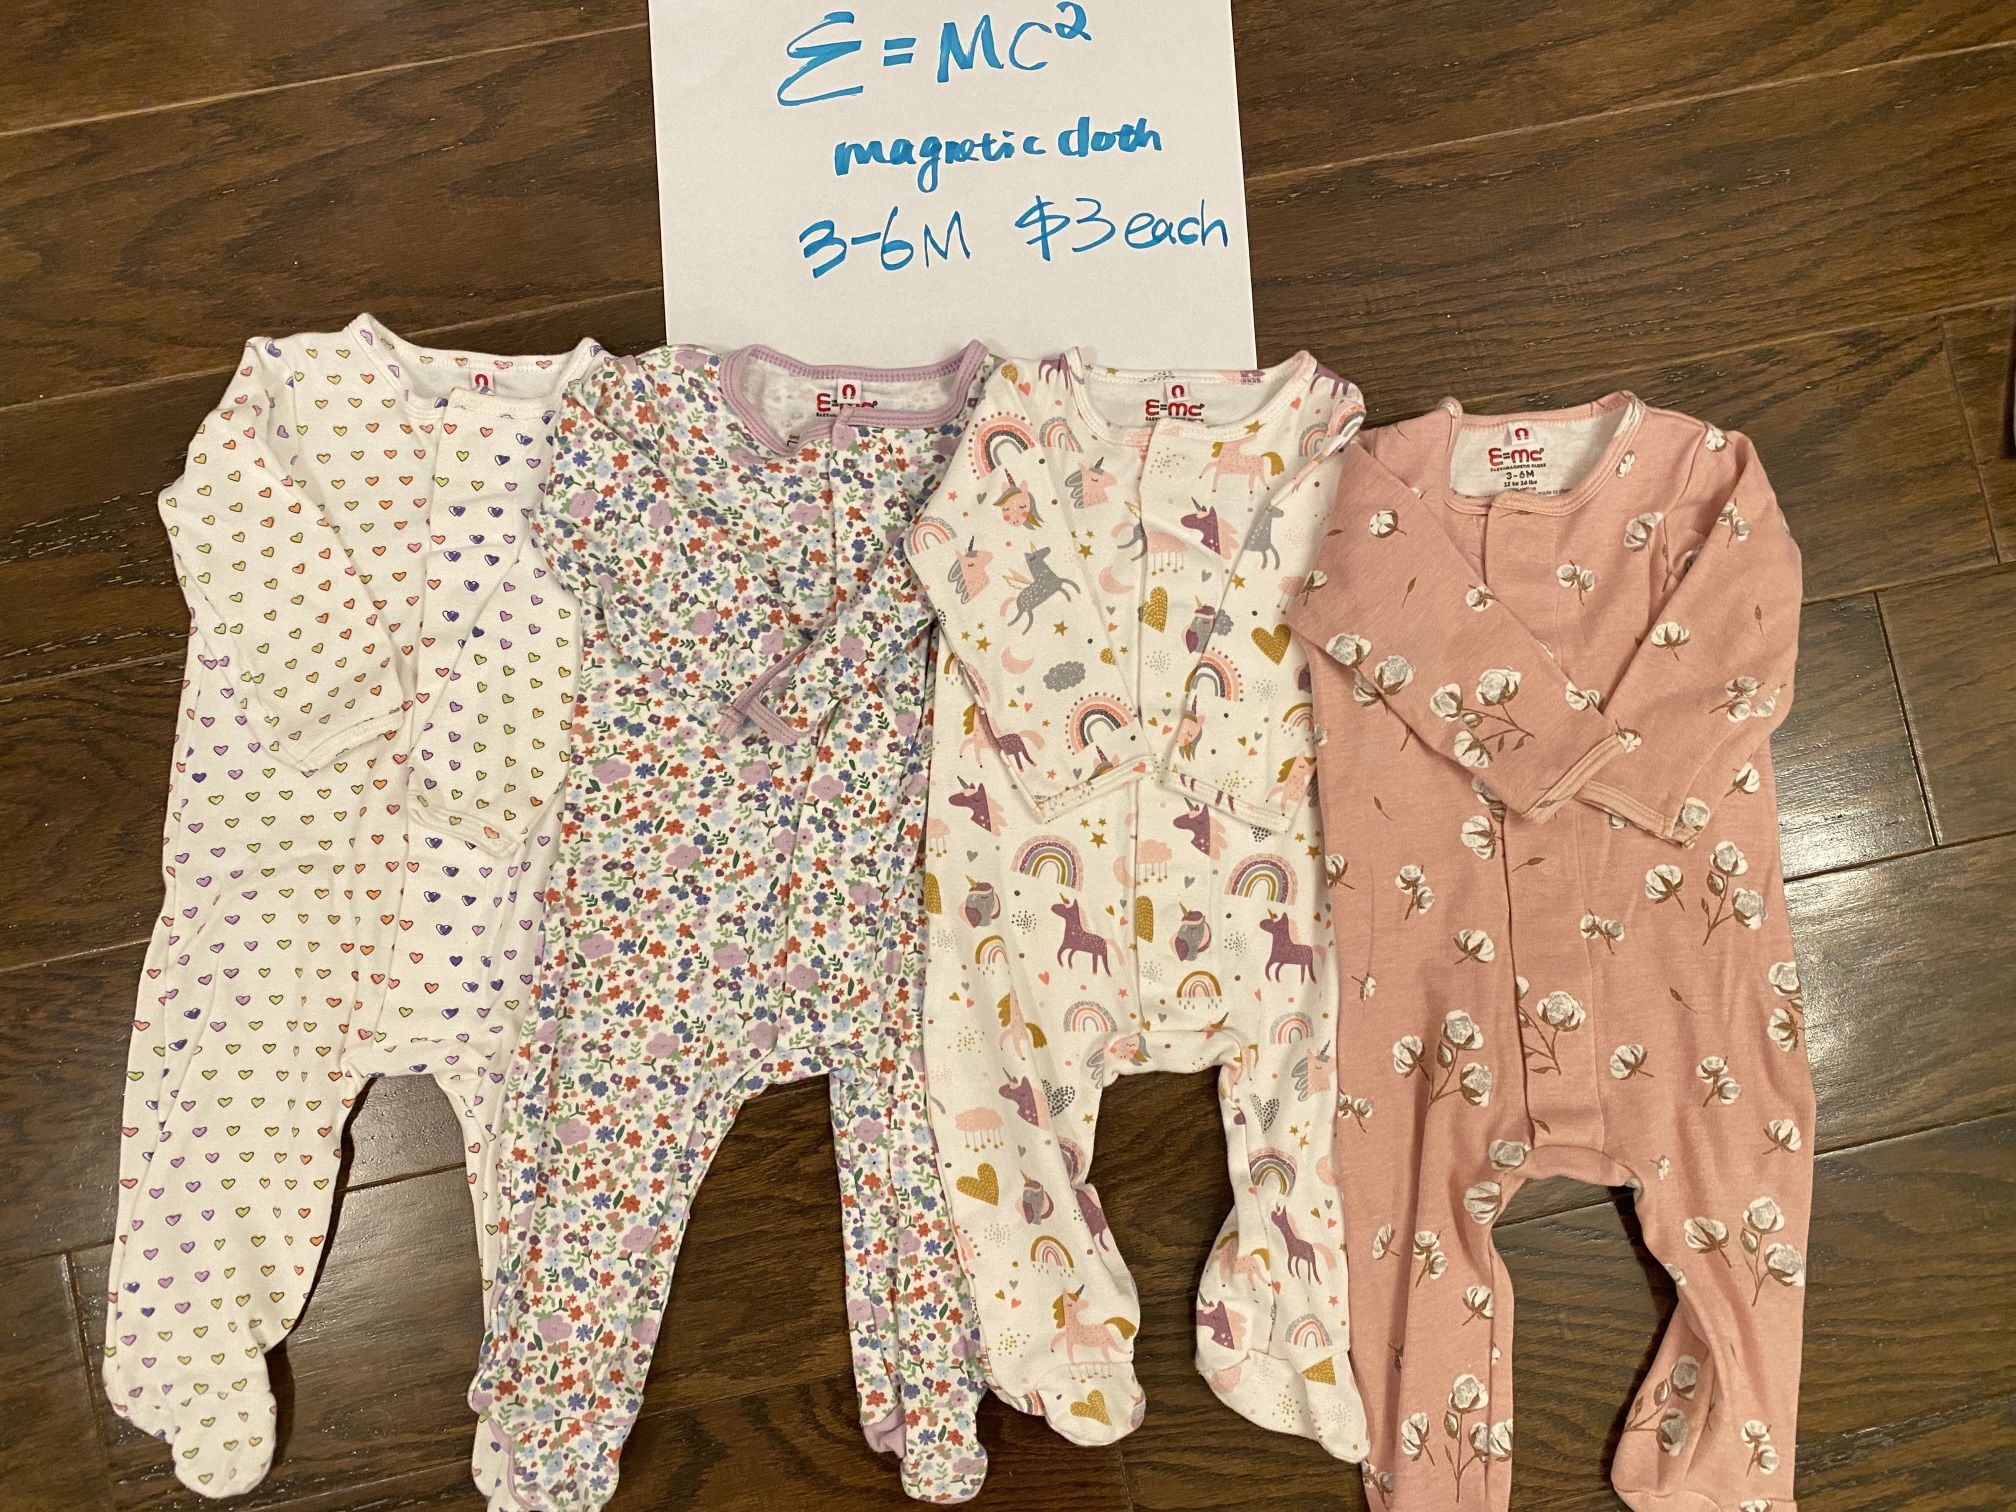 E=MC2  Baby Magnetic Cloth (0-3-6M) $3 Each 